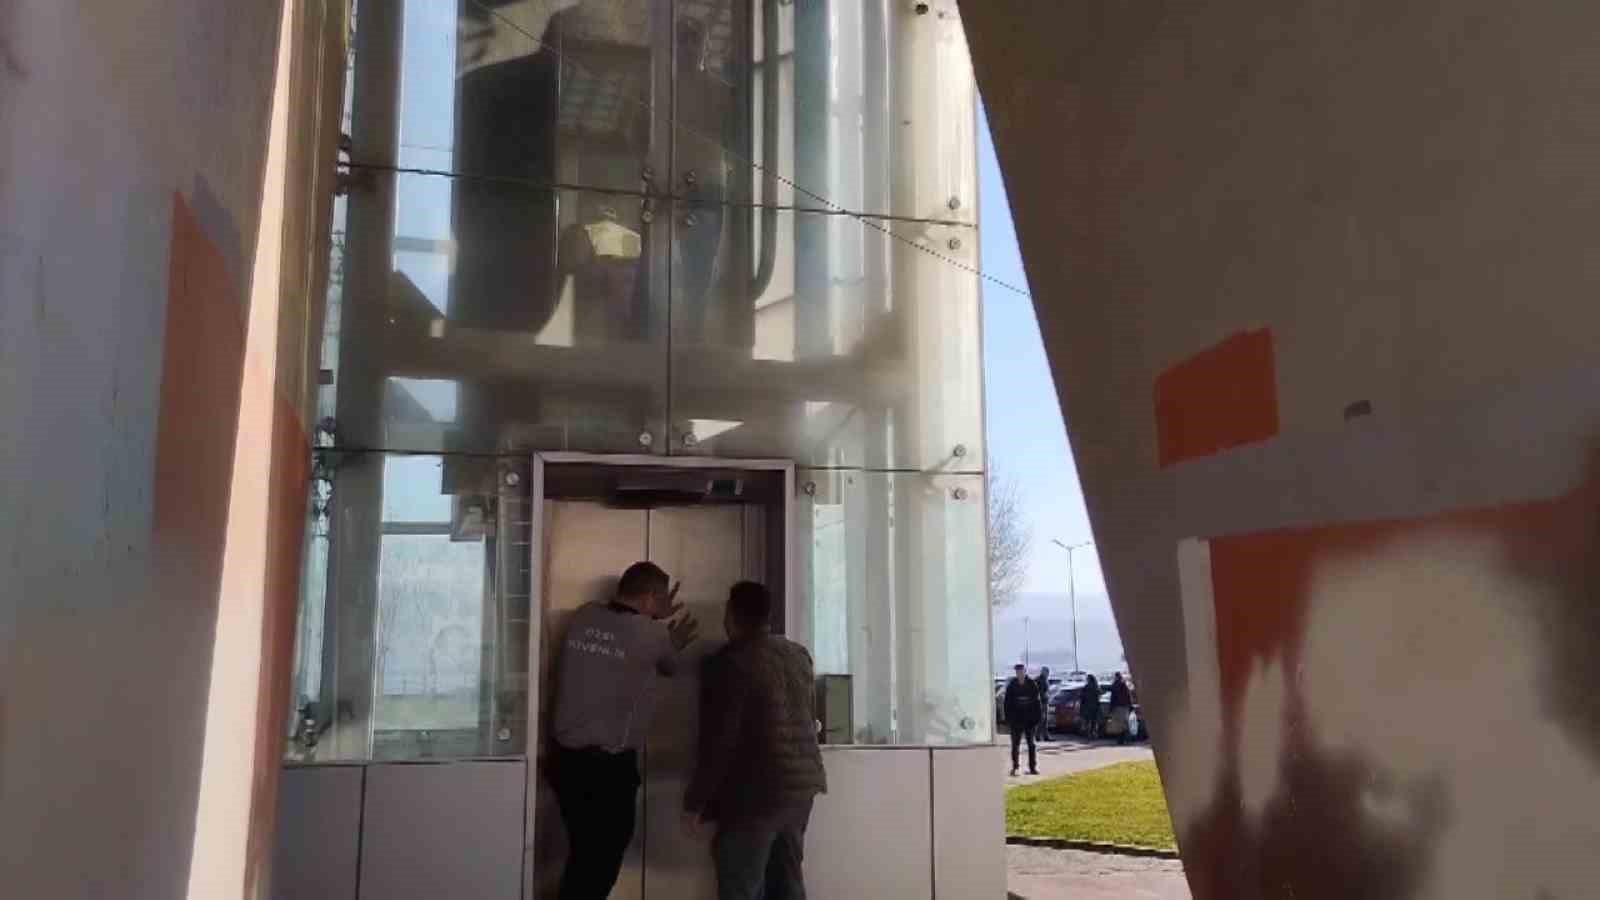 ariza yapan asansorun kabini havada asili kaldi vatandaslar mahsur kaldi 0 lfuDHEJ3